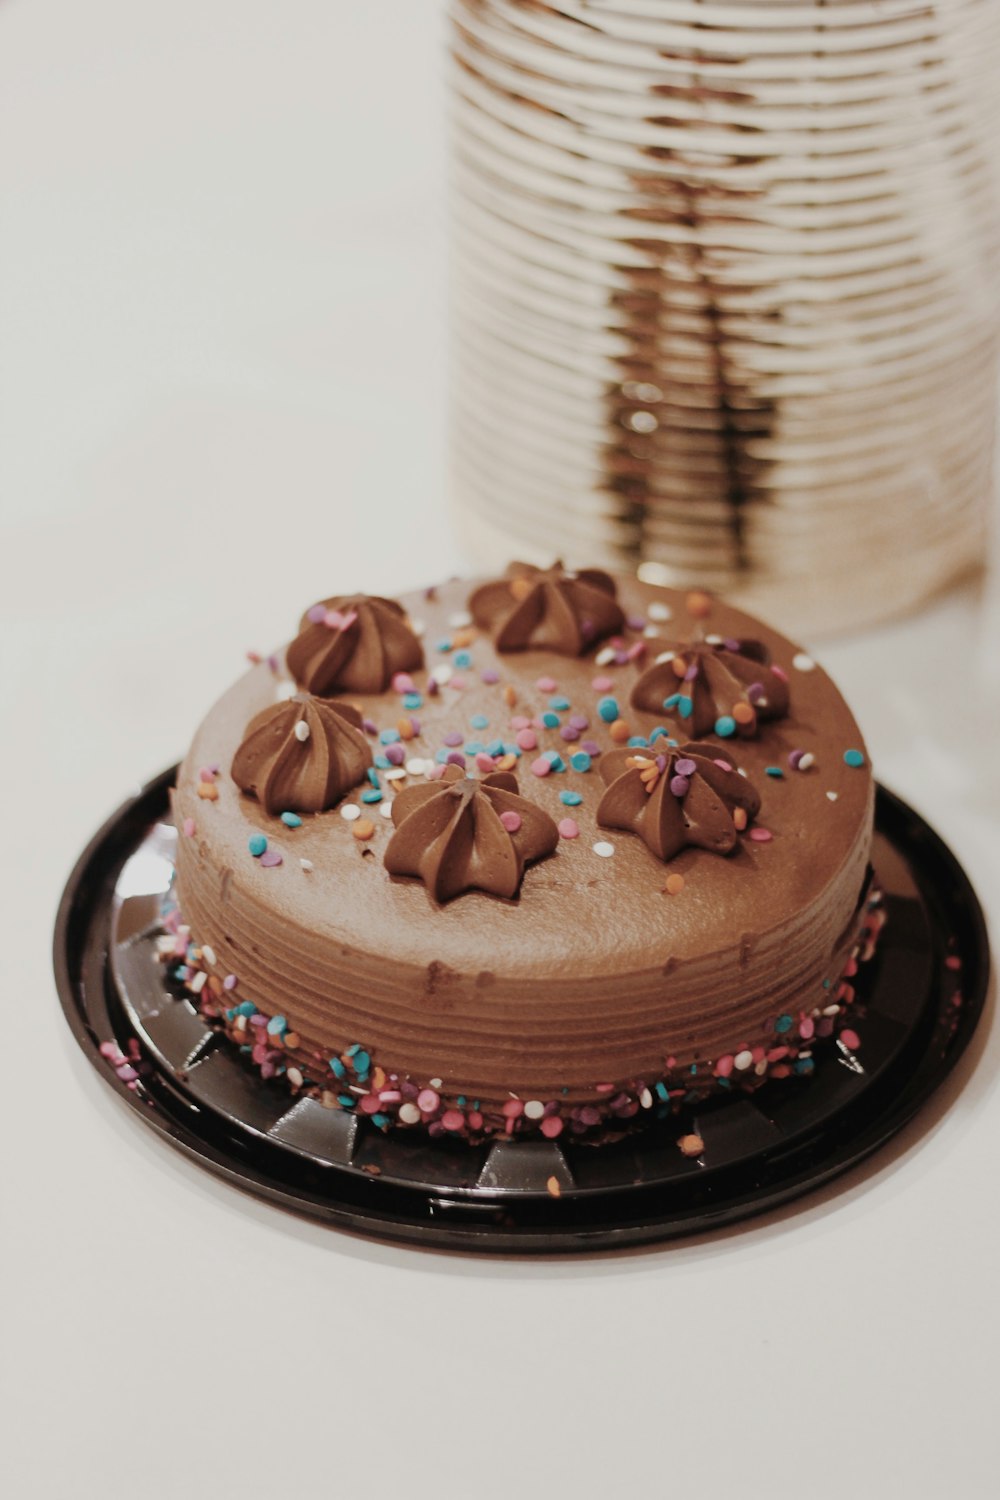 round chocolate coated cake